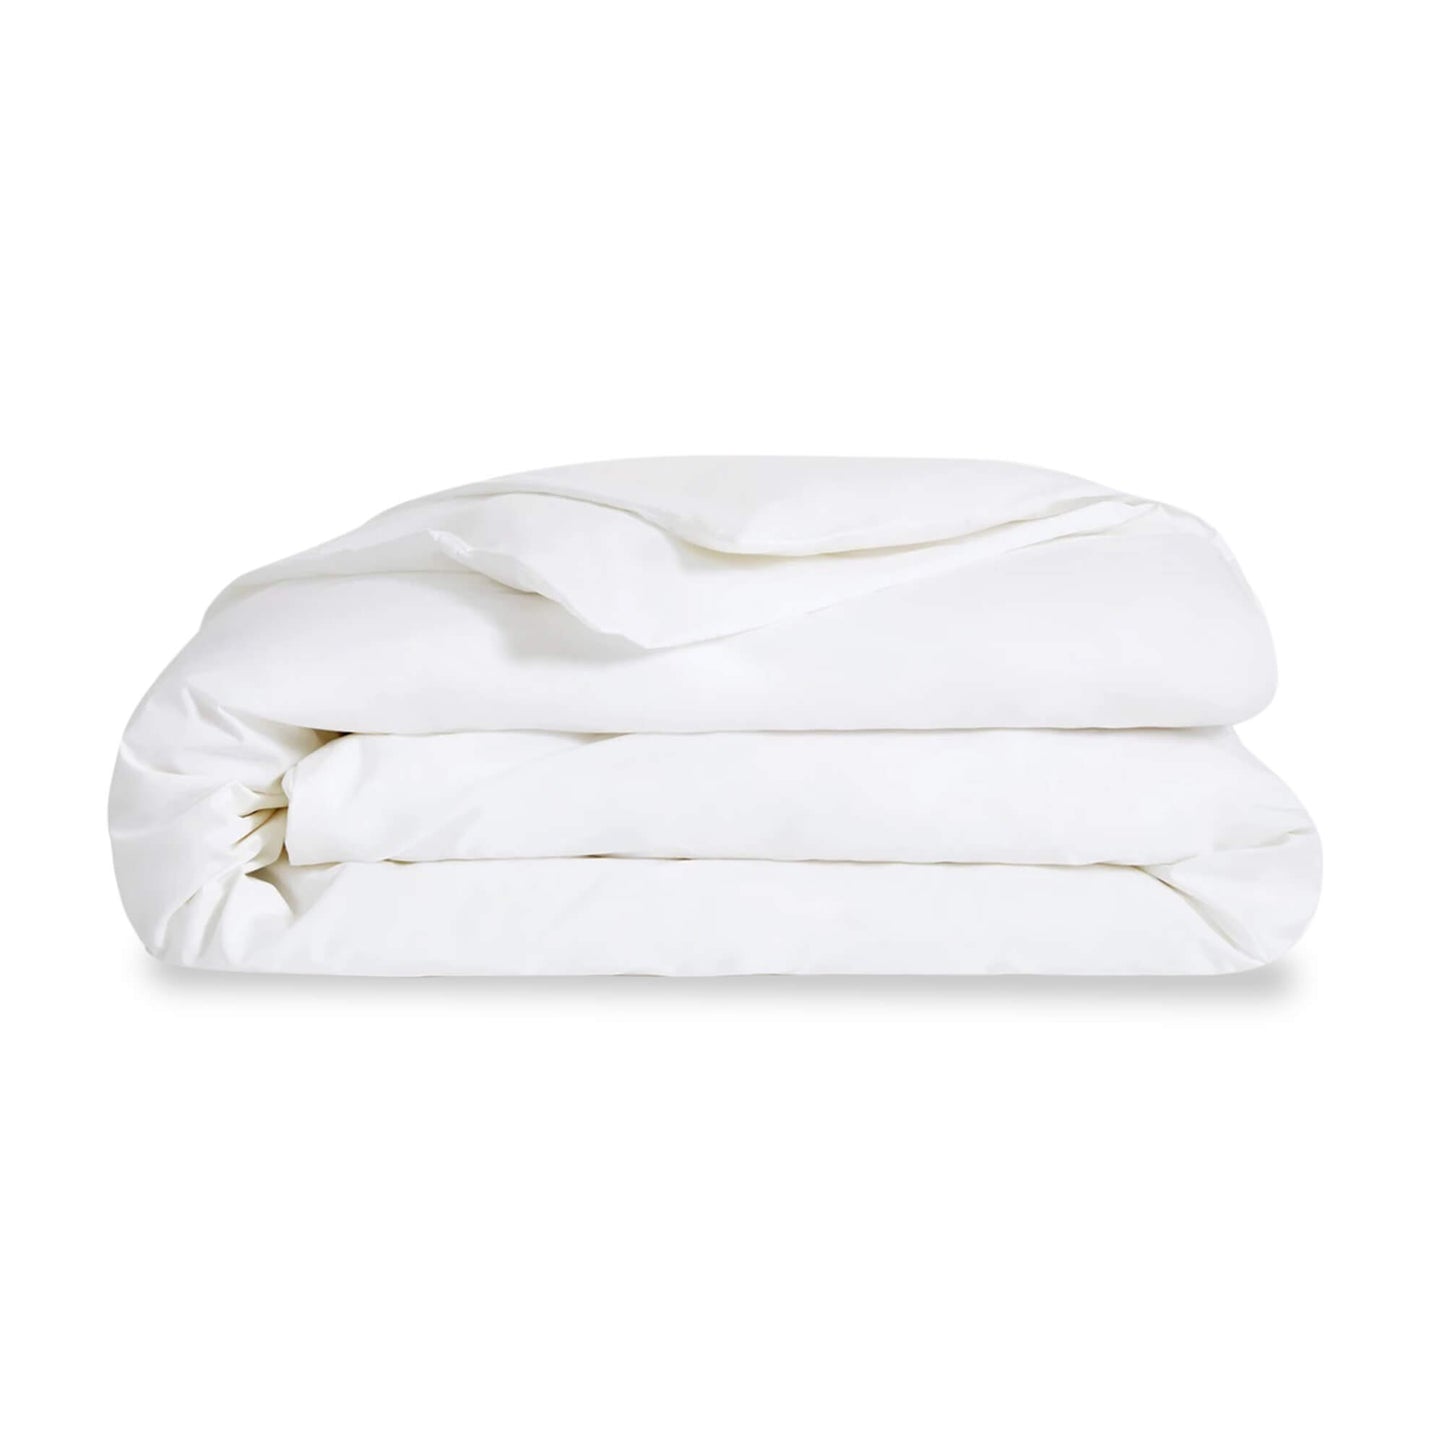 Delilah Home 100% Organic Cotton Duvet Covers
Jungle Pillows